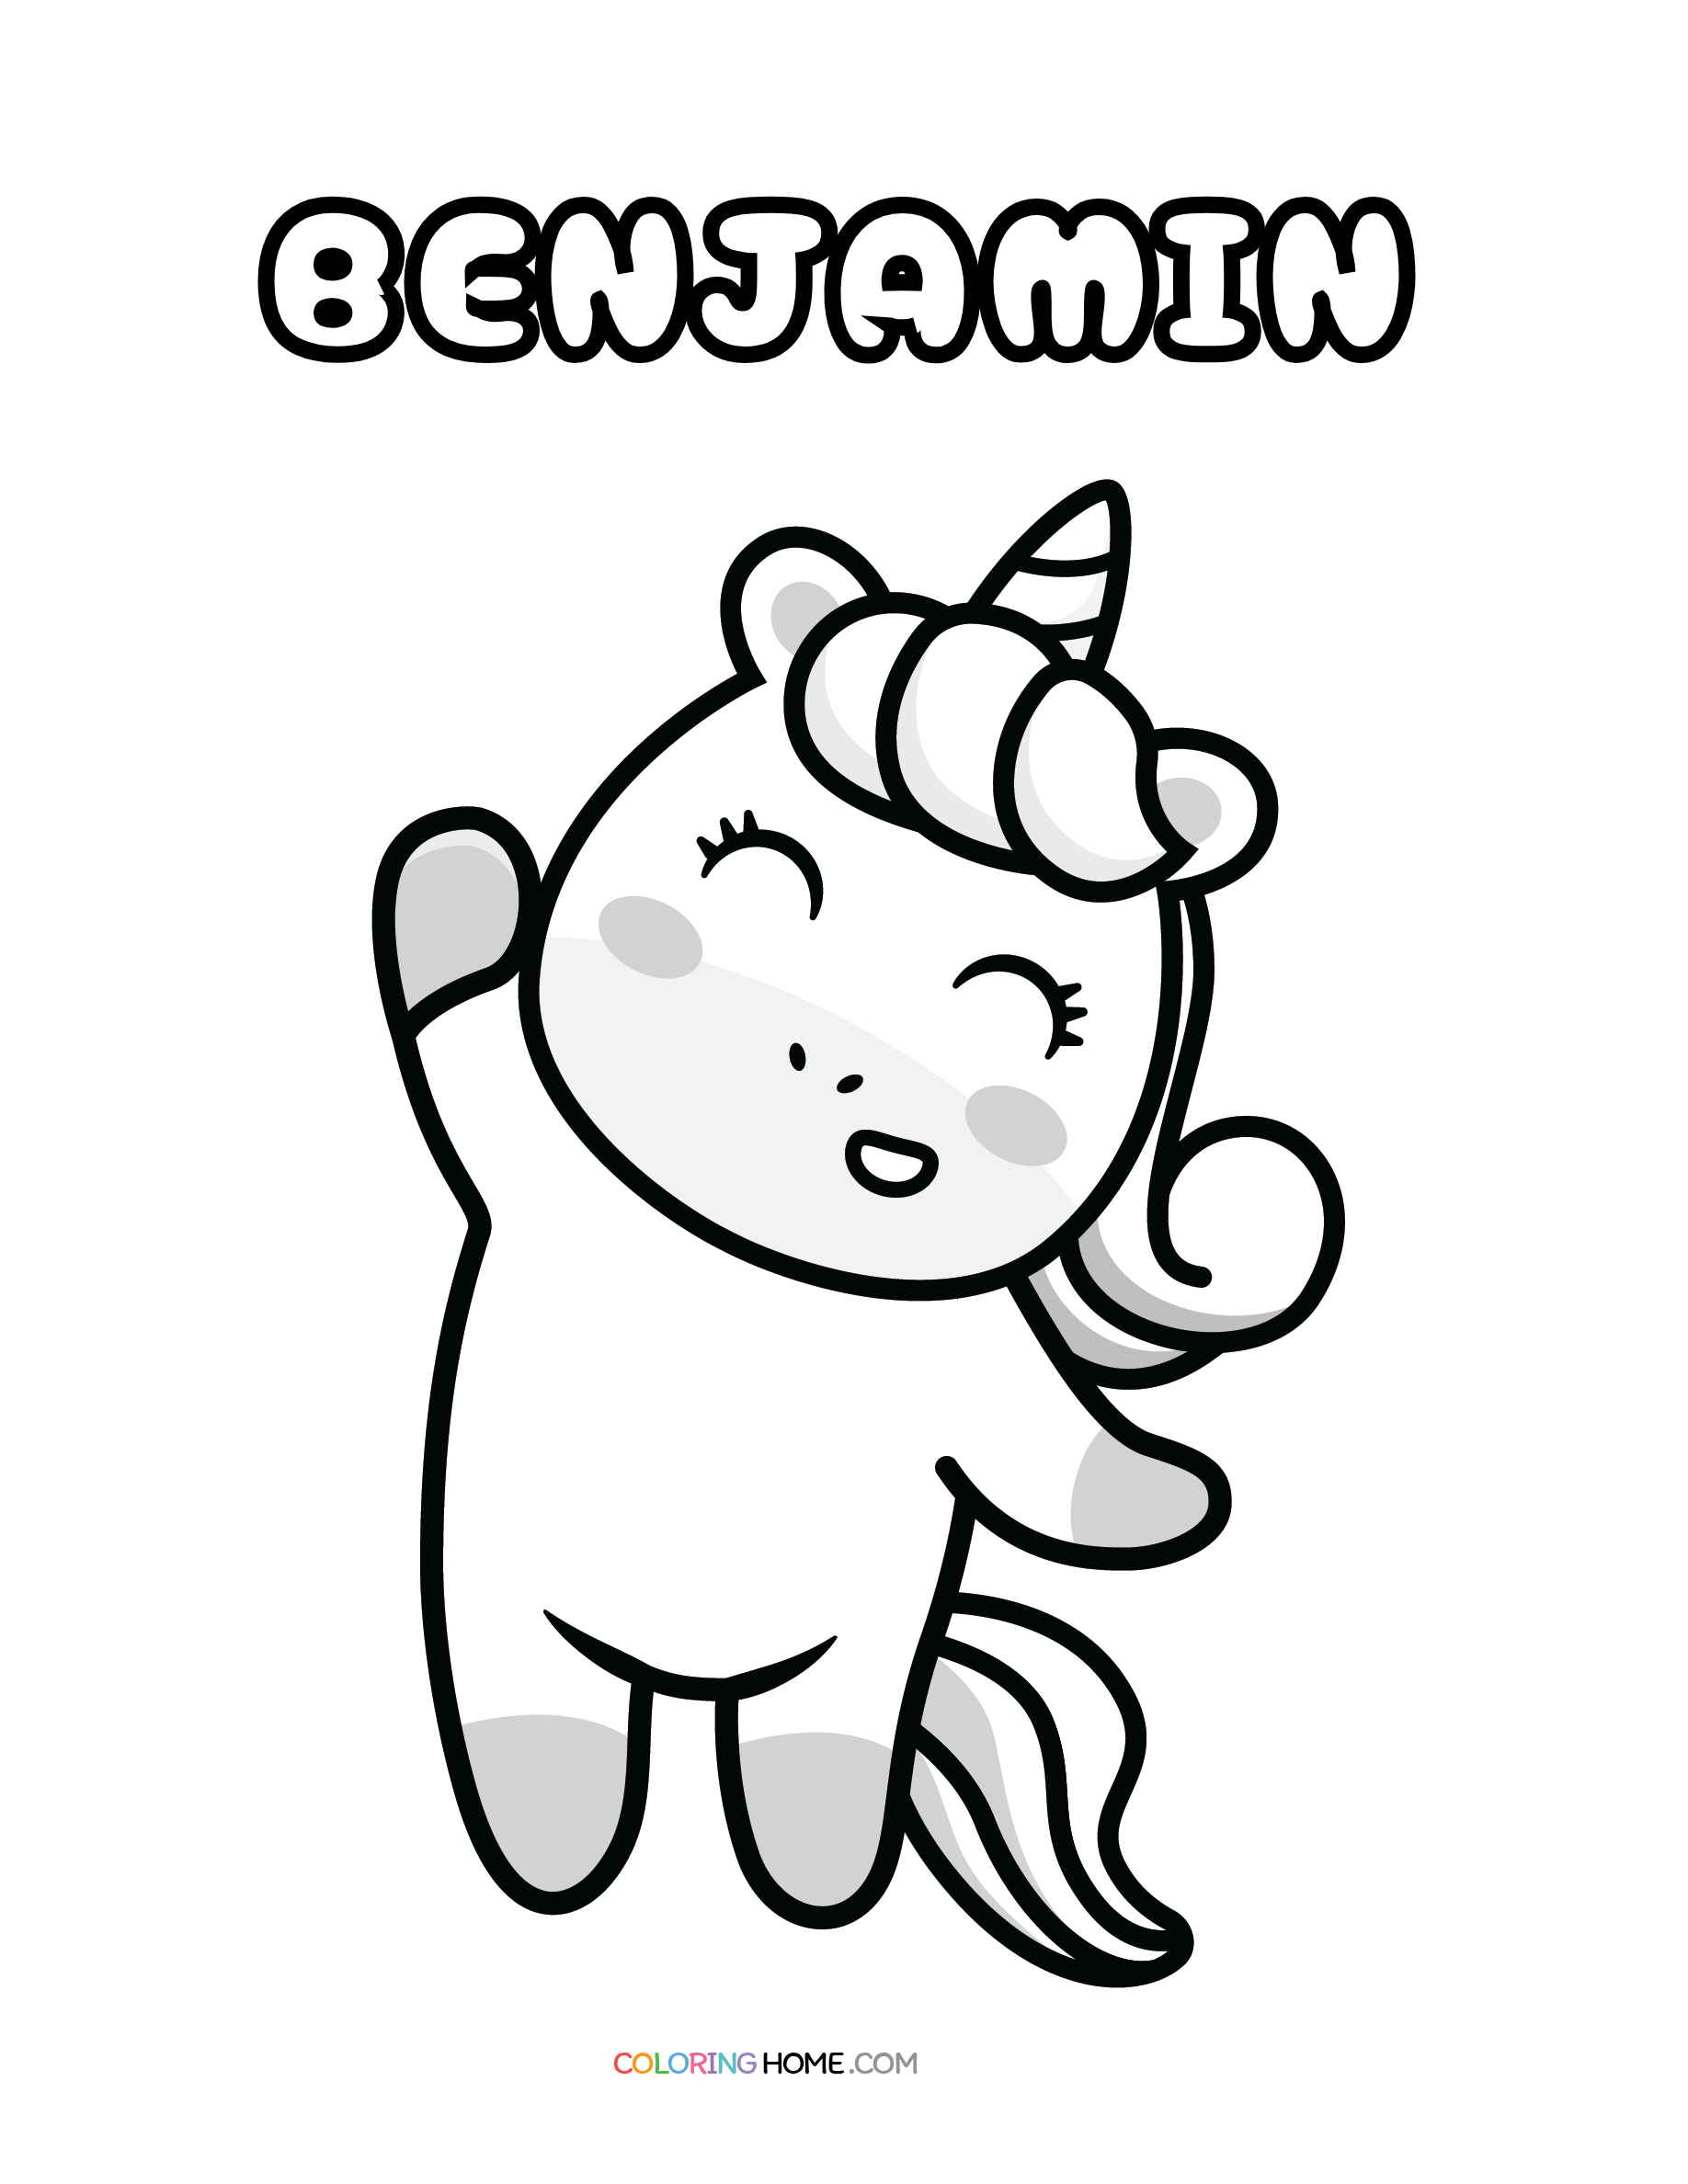 Benjamin unicorn coloring page